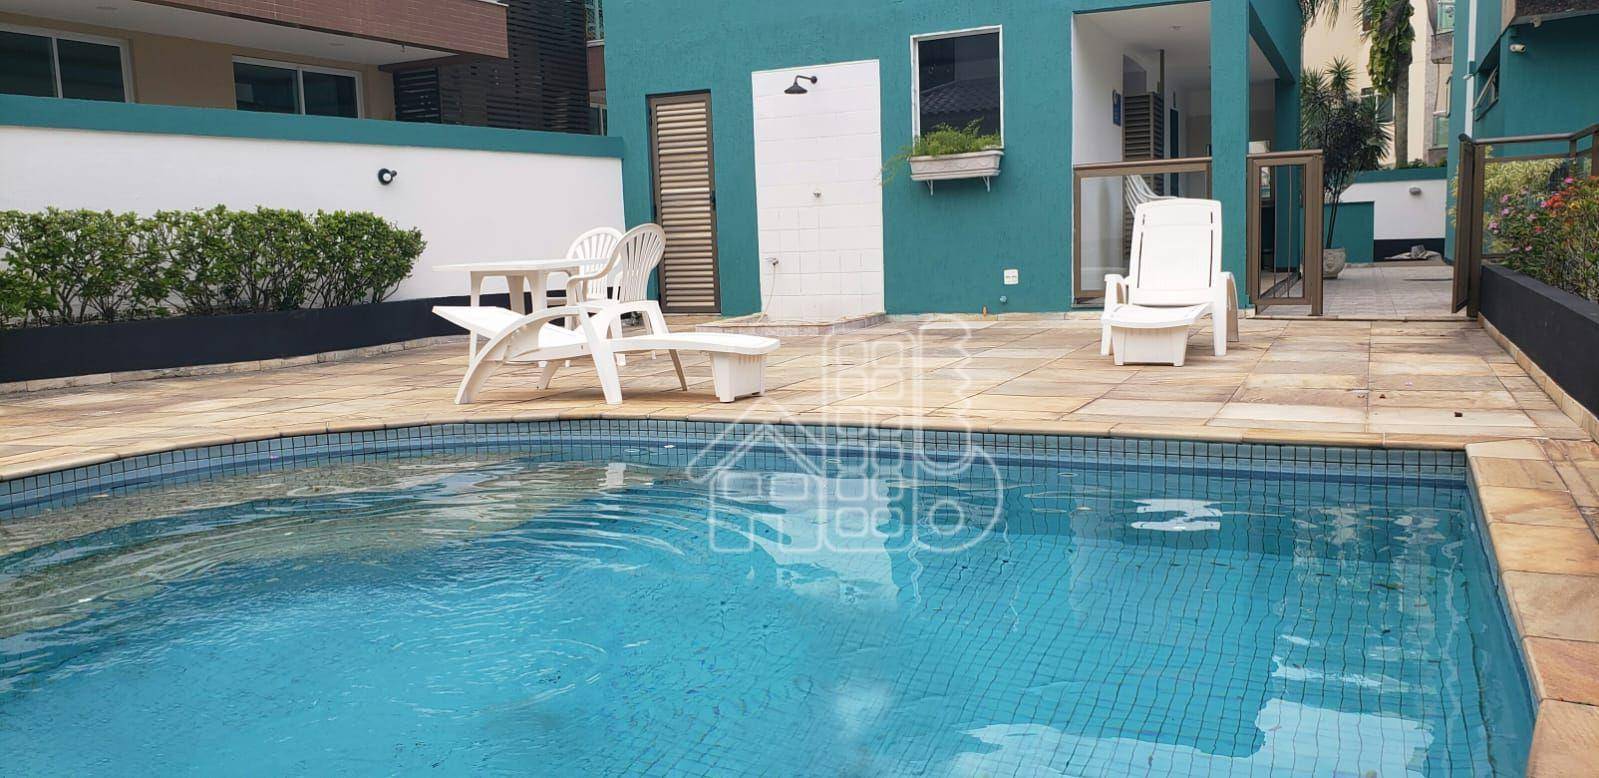 Apartamento à venda, 50 m² por R$ 480.000,00 - Itacoatiara - Niterói/RJ